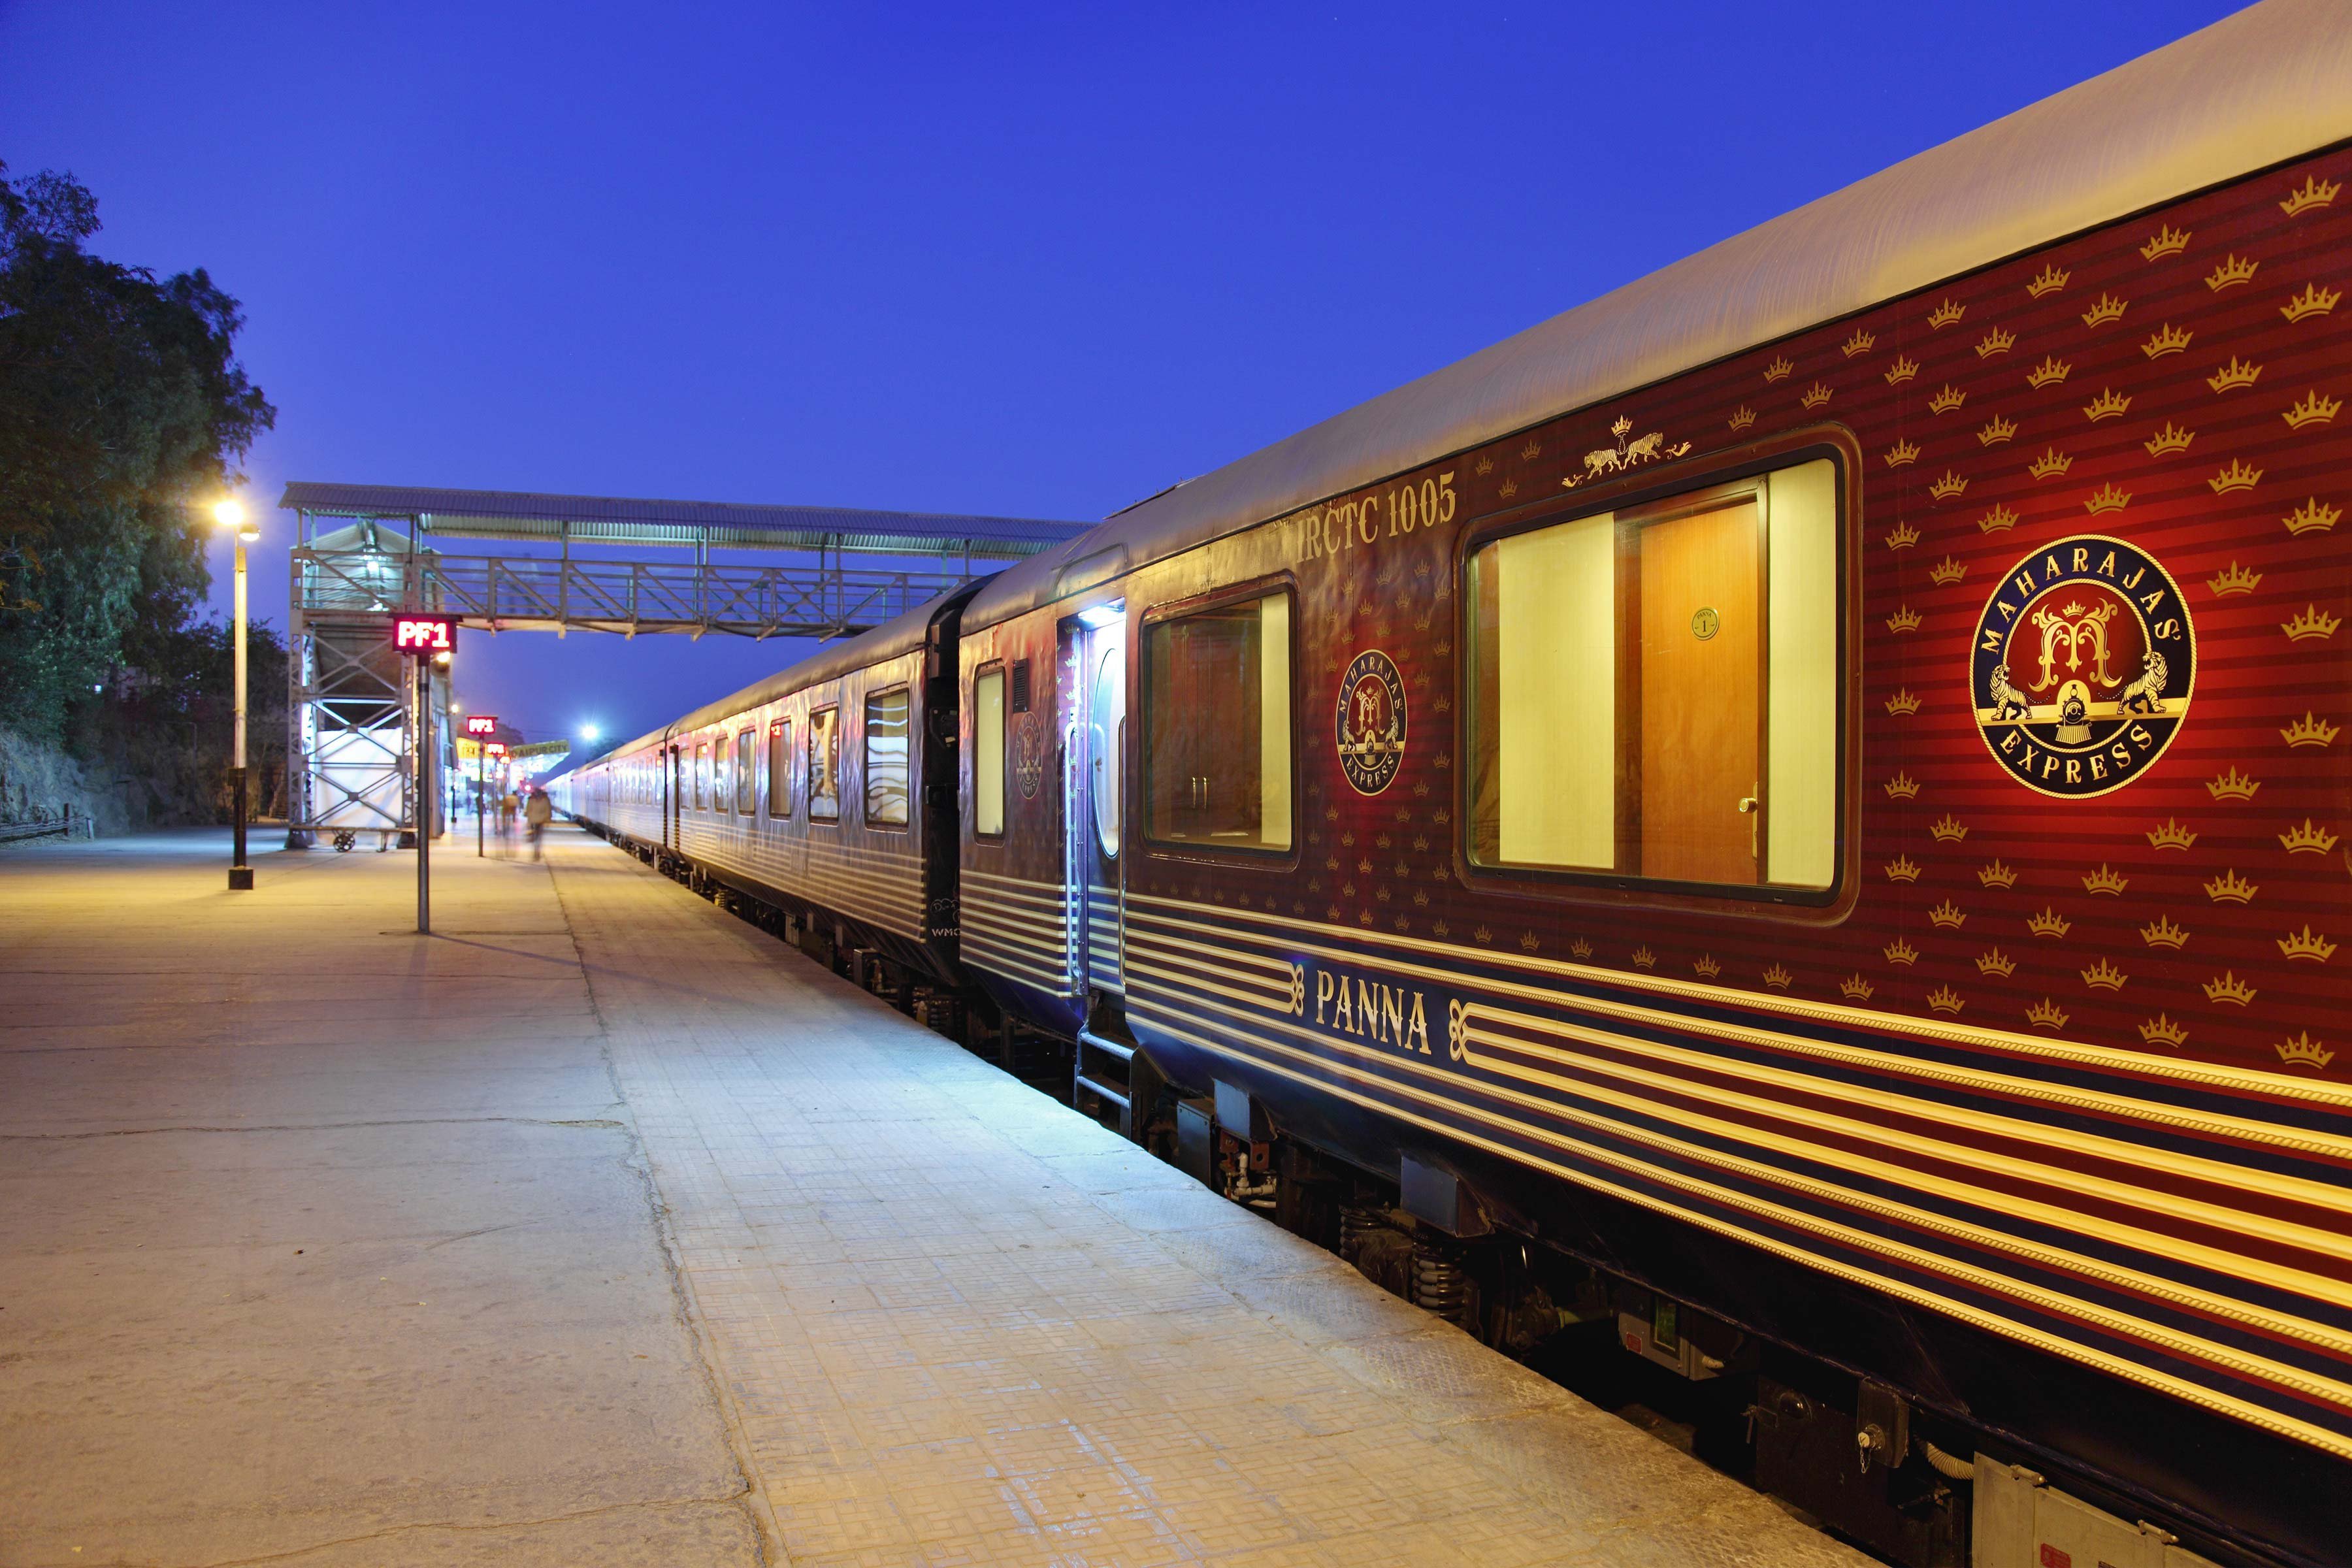 luxury train journeys in india